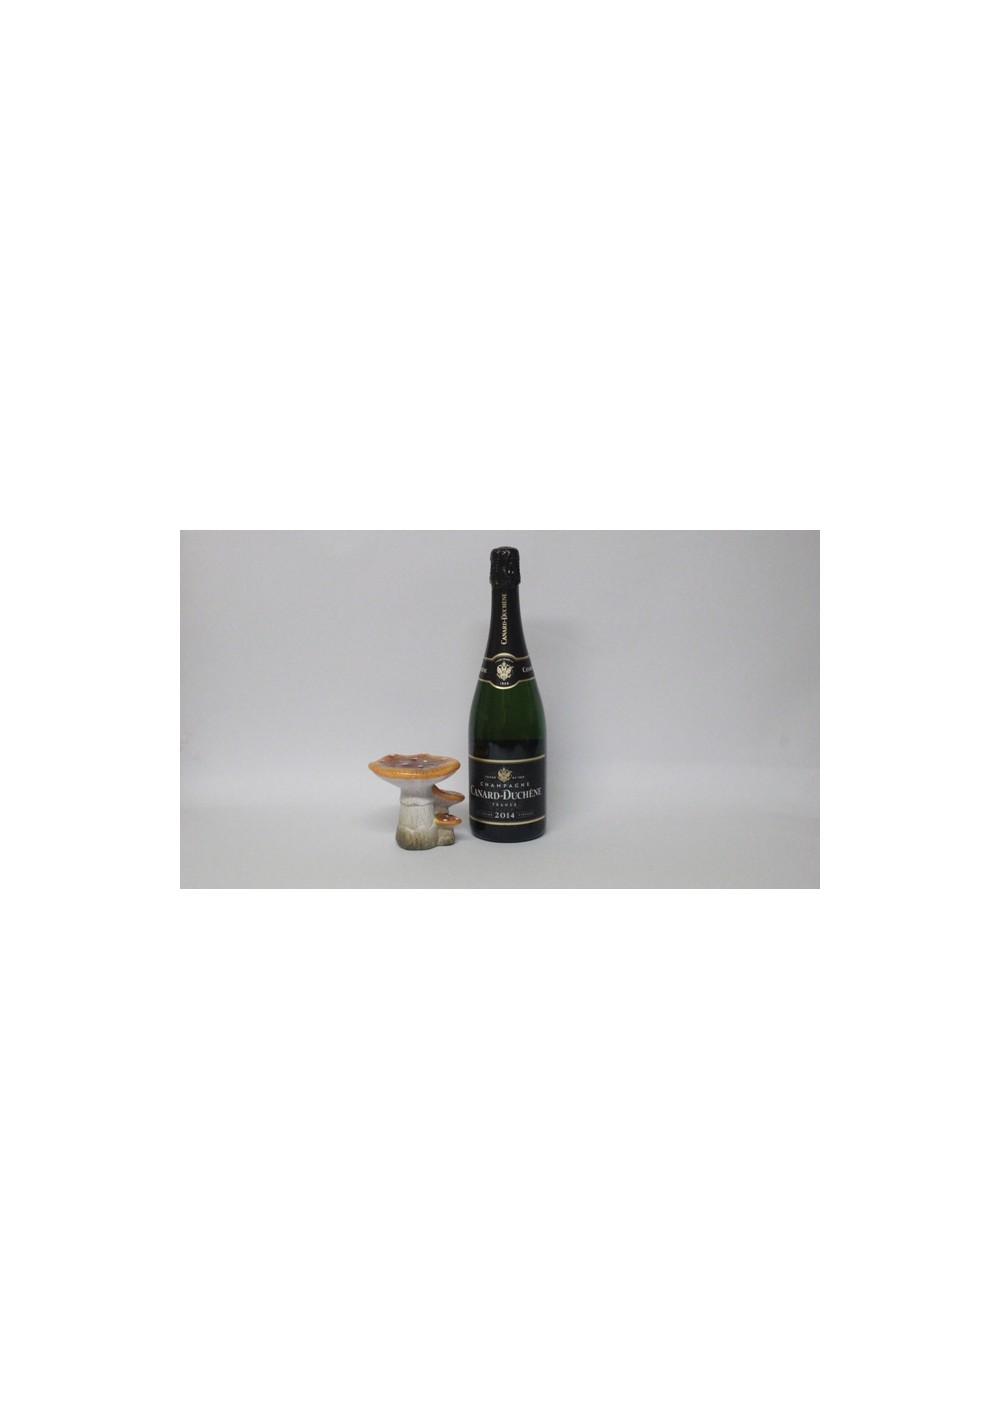 Champagne Canard Duchêne vintage 2014